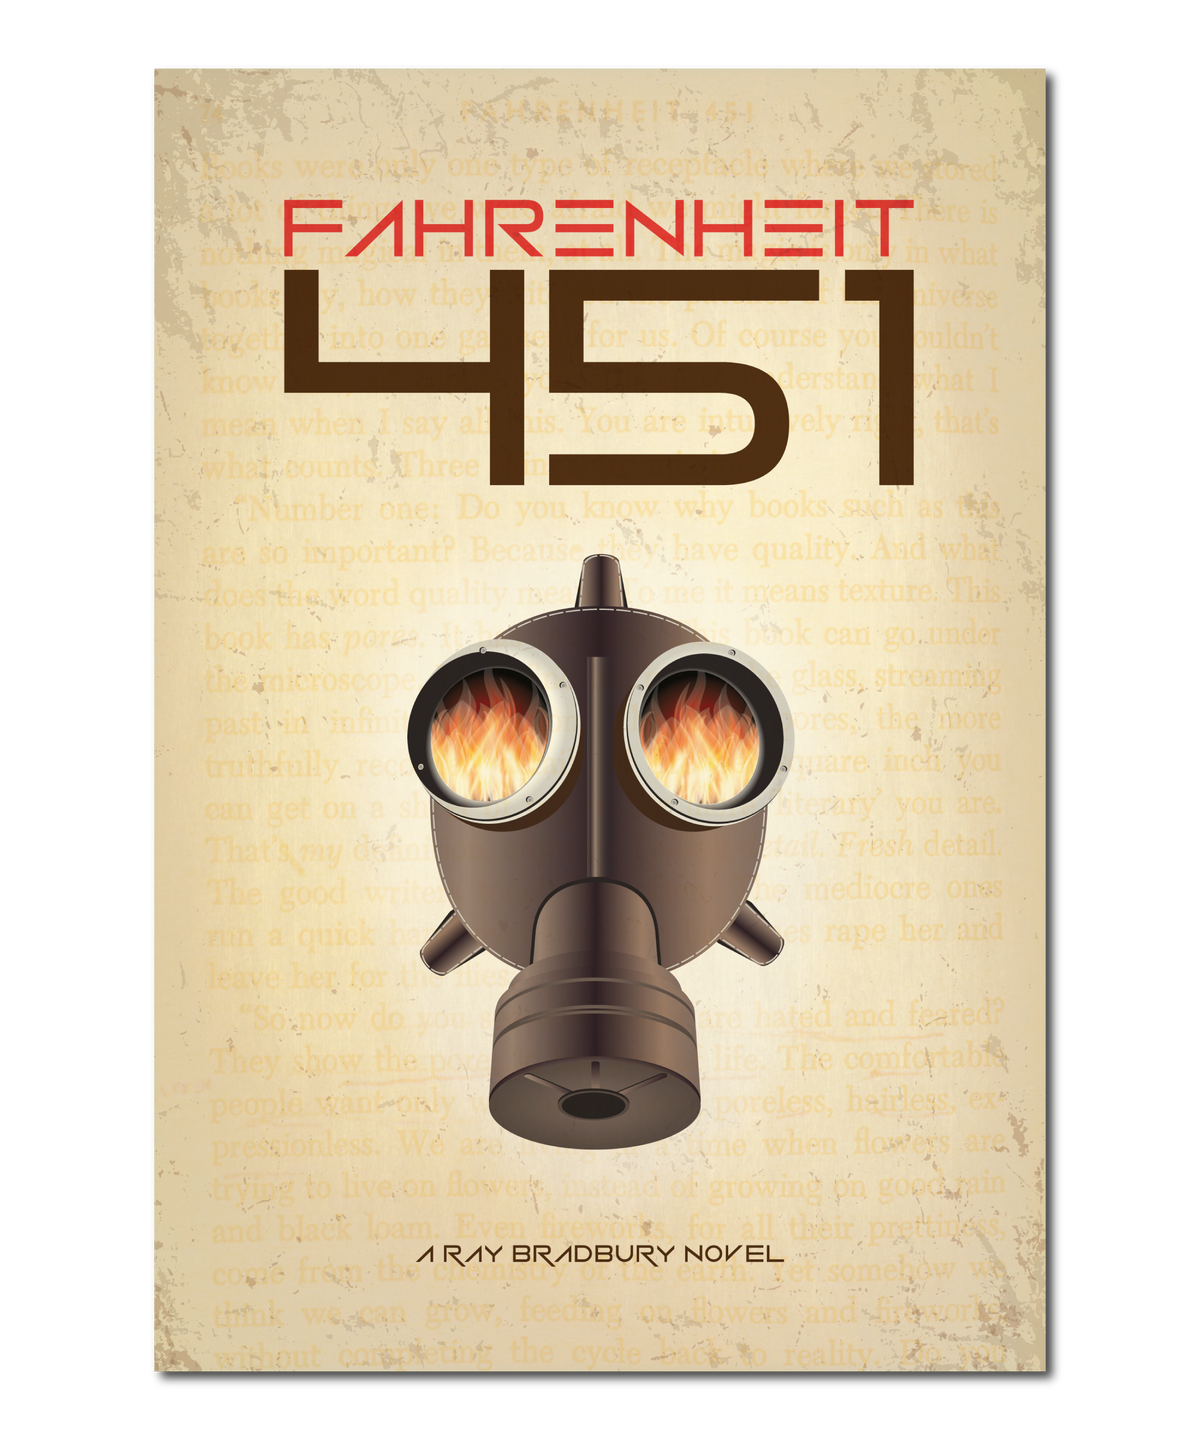 Original Print Reinterpretation of the classic novel, "Fahrenheit 451”